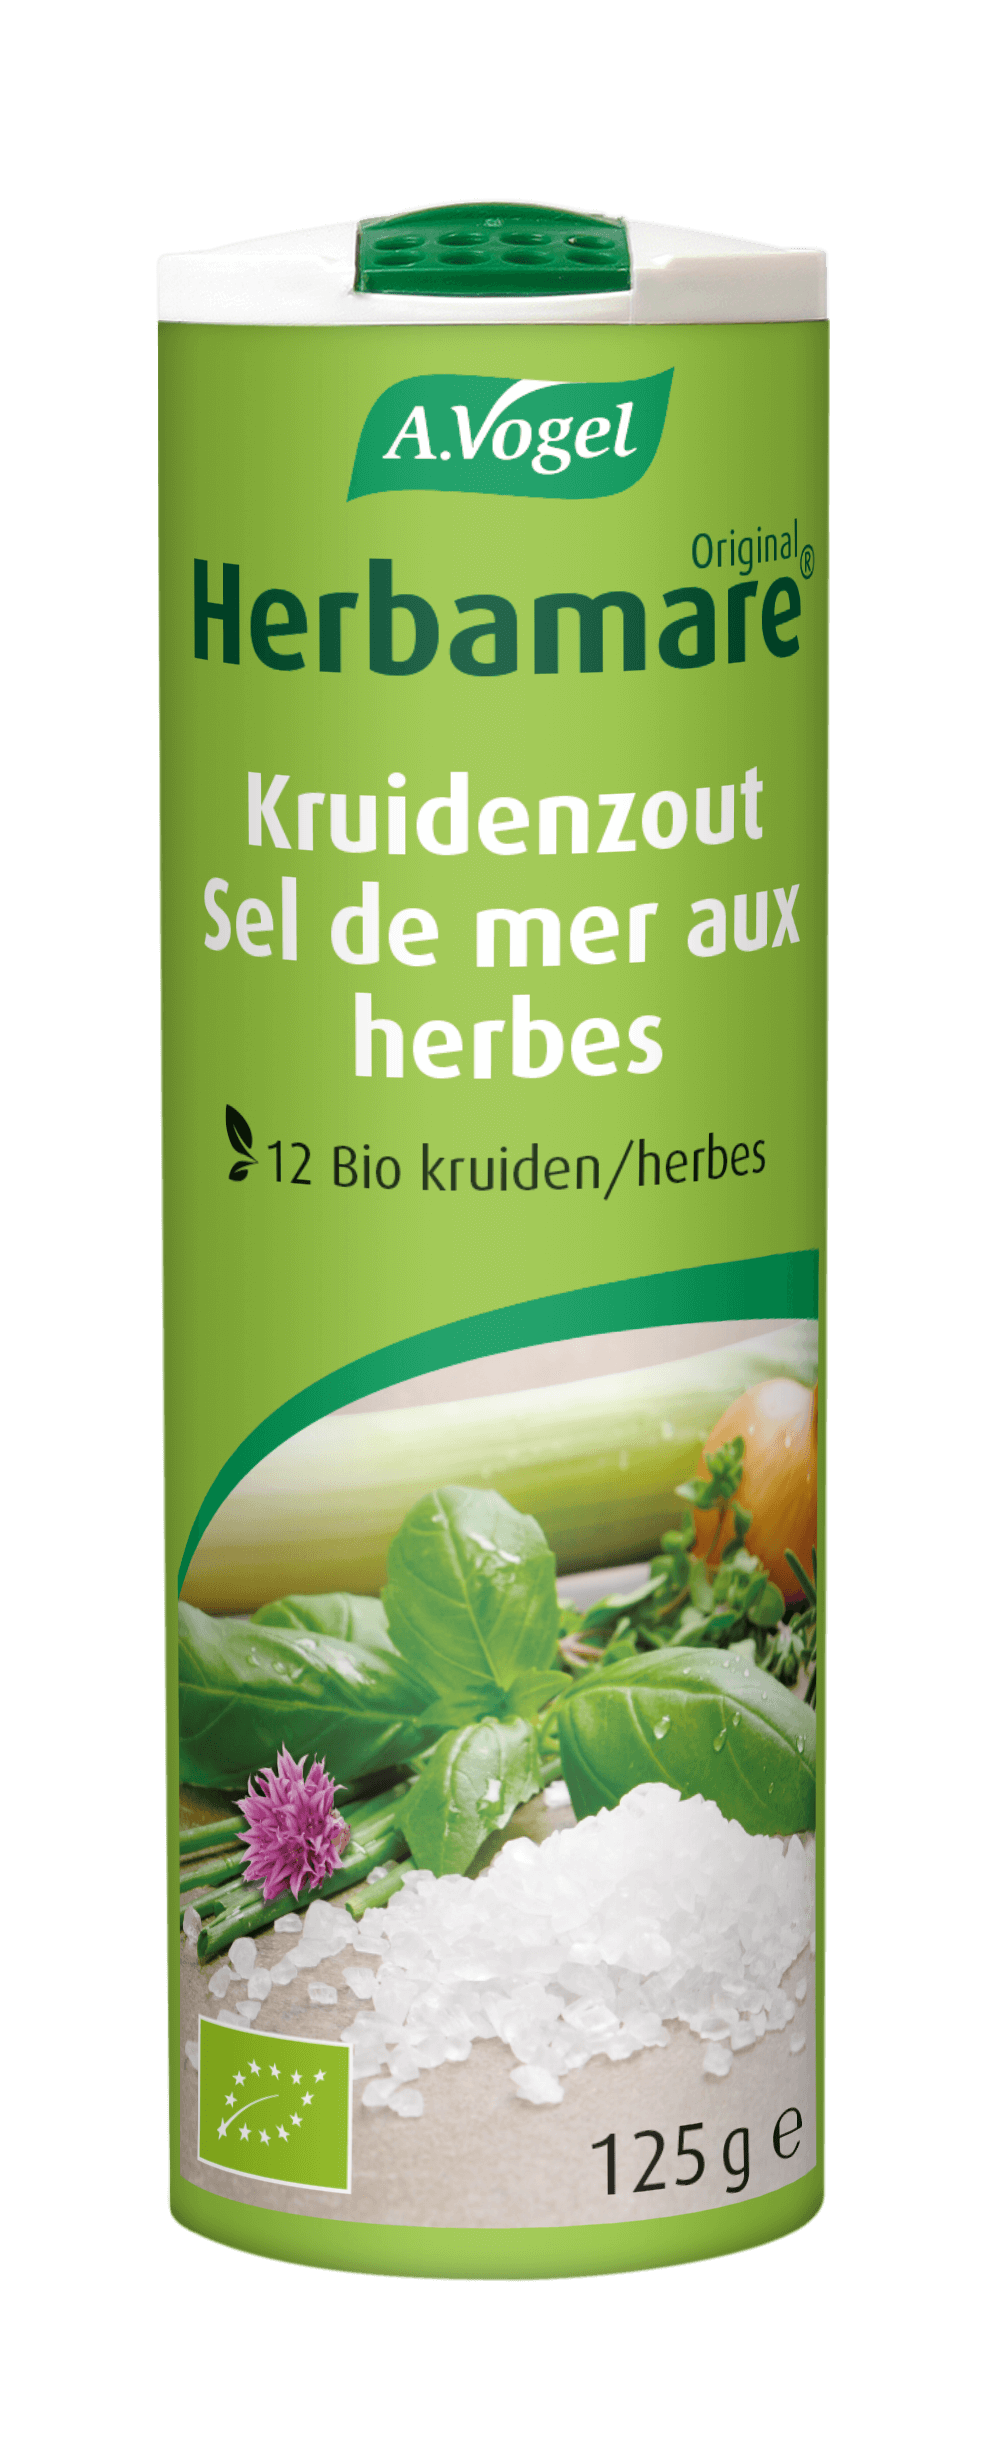 Herbamare Original - Glutenvrij kruidenzout A.Vogel producten